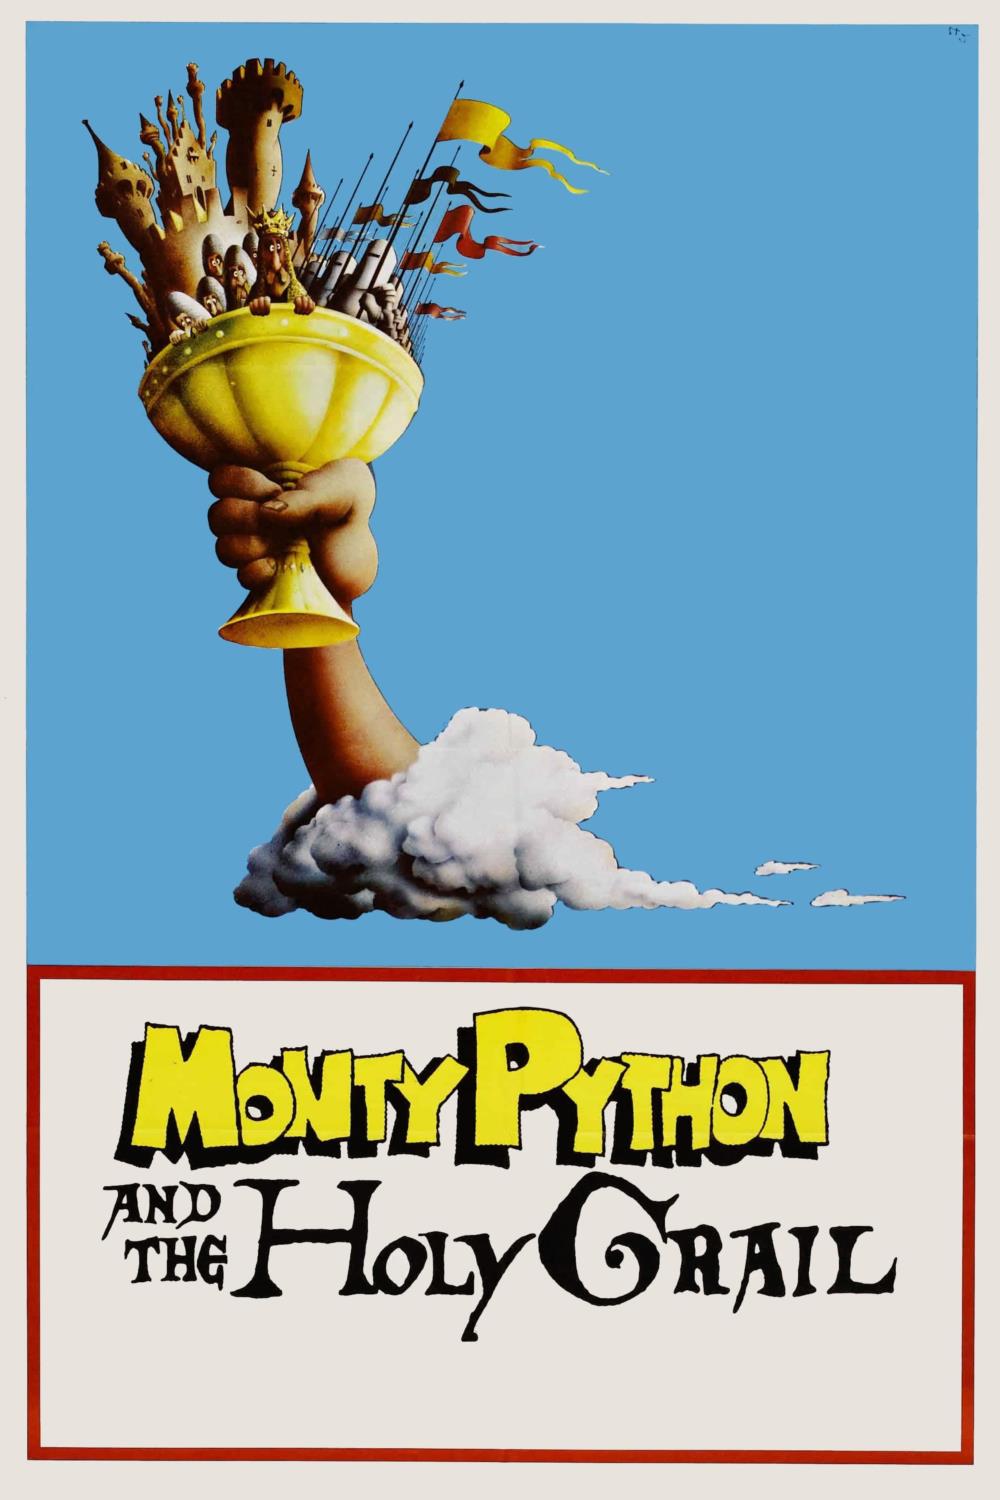 Stiahni si Filmy CZ/SK dabing Monty Python a Svaty Gral / Monty Python and the Holy Grail  (1975)(CZ)[TvRip][1080p] = CSFD 84%